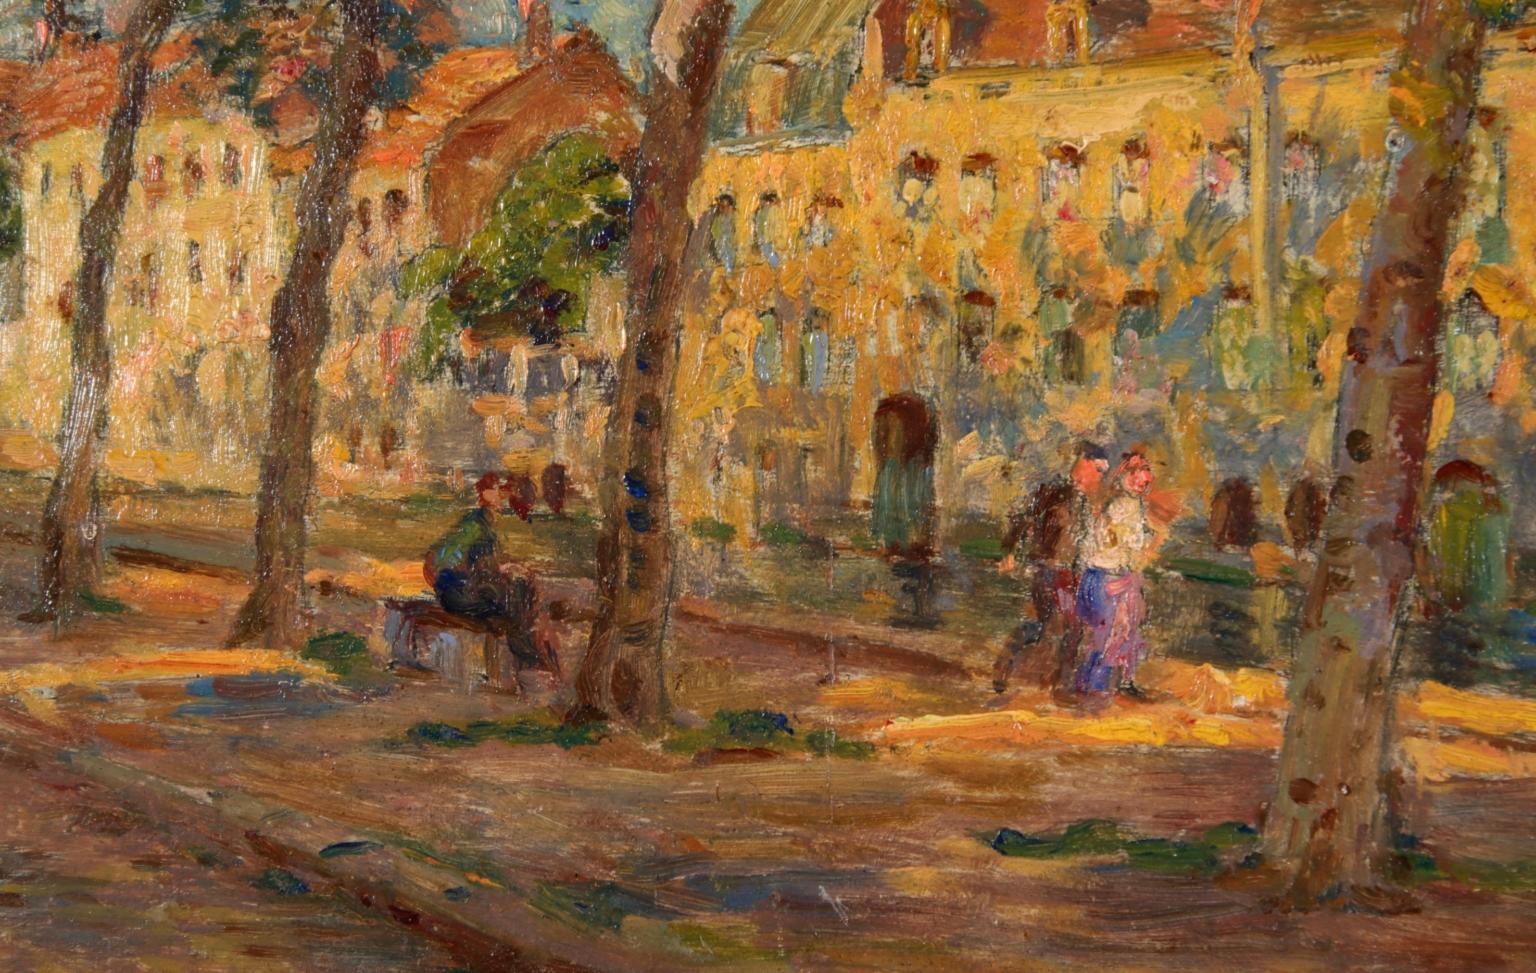 Au bord du canal - Impressionist Oil, Figures by Canal in Landscape, Henri Duhem 2